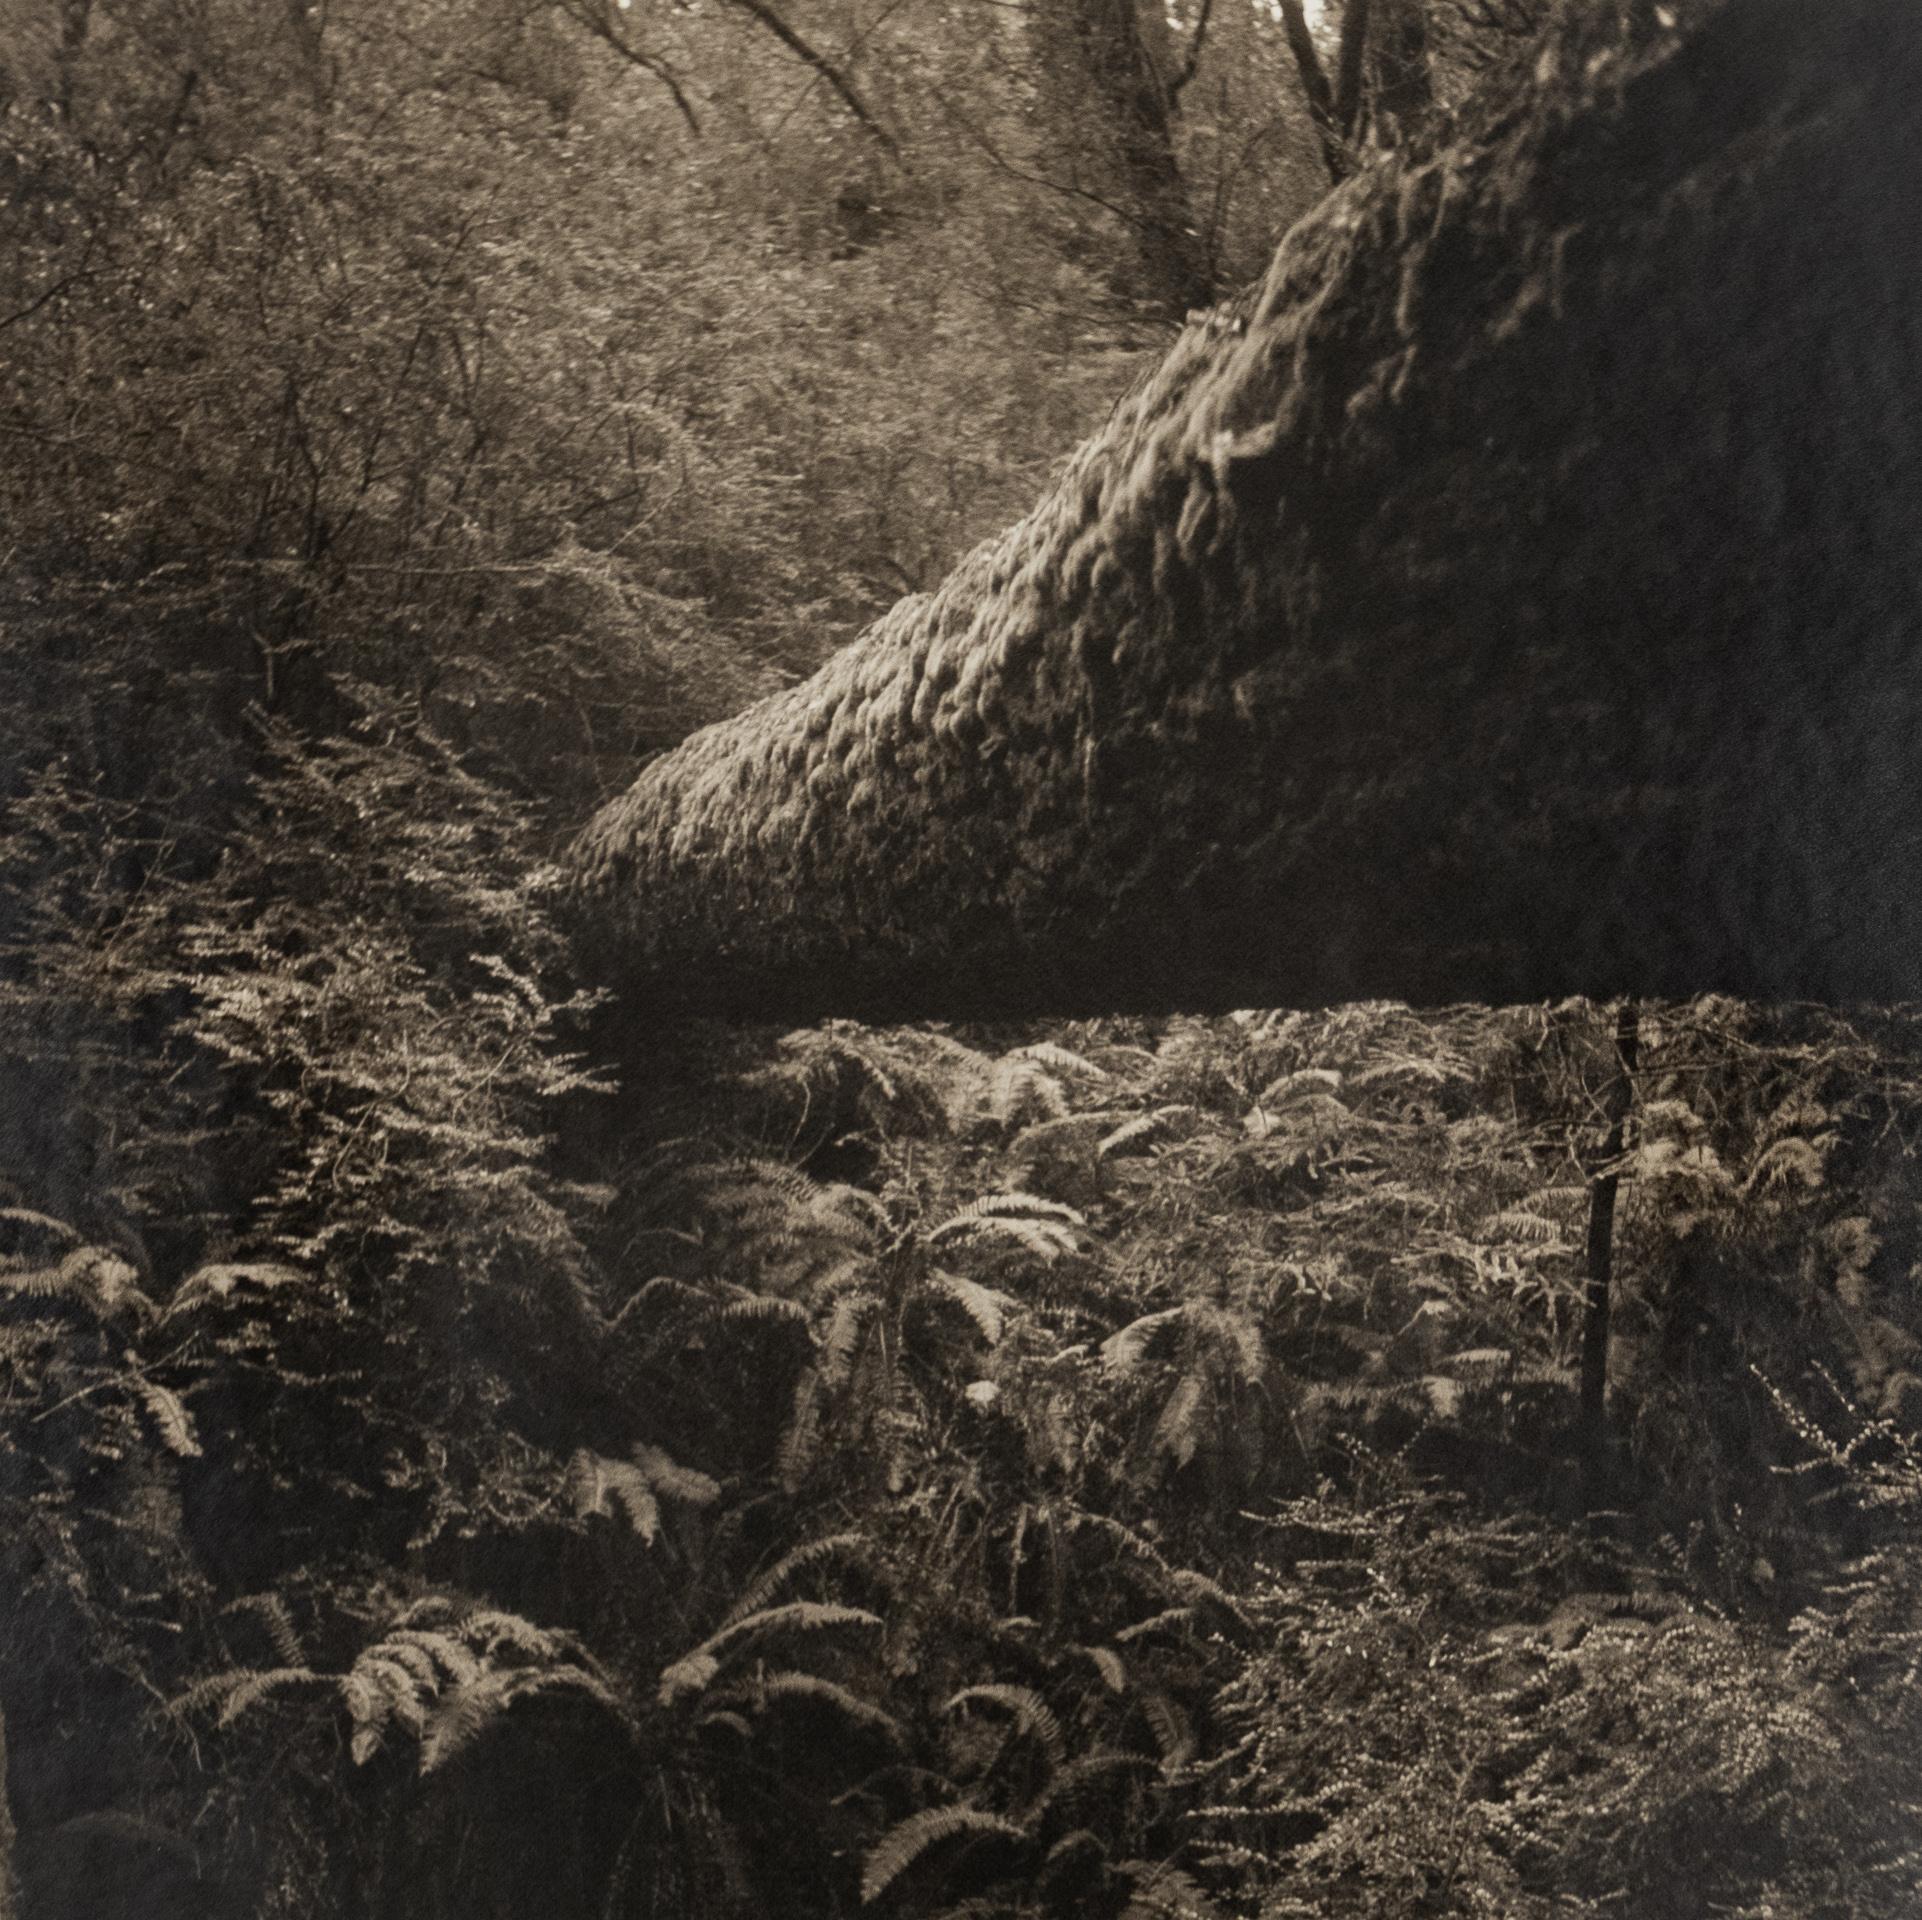 David Halliday Black and White Photograph - Fallen Sequoia